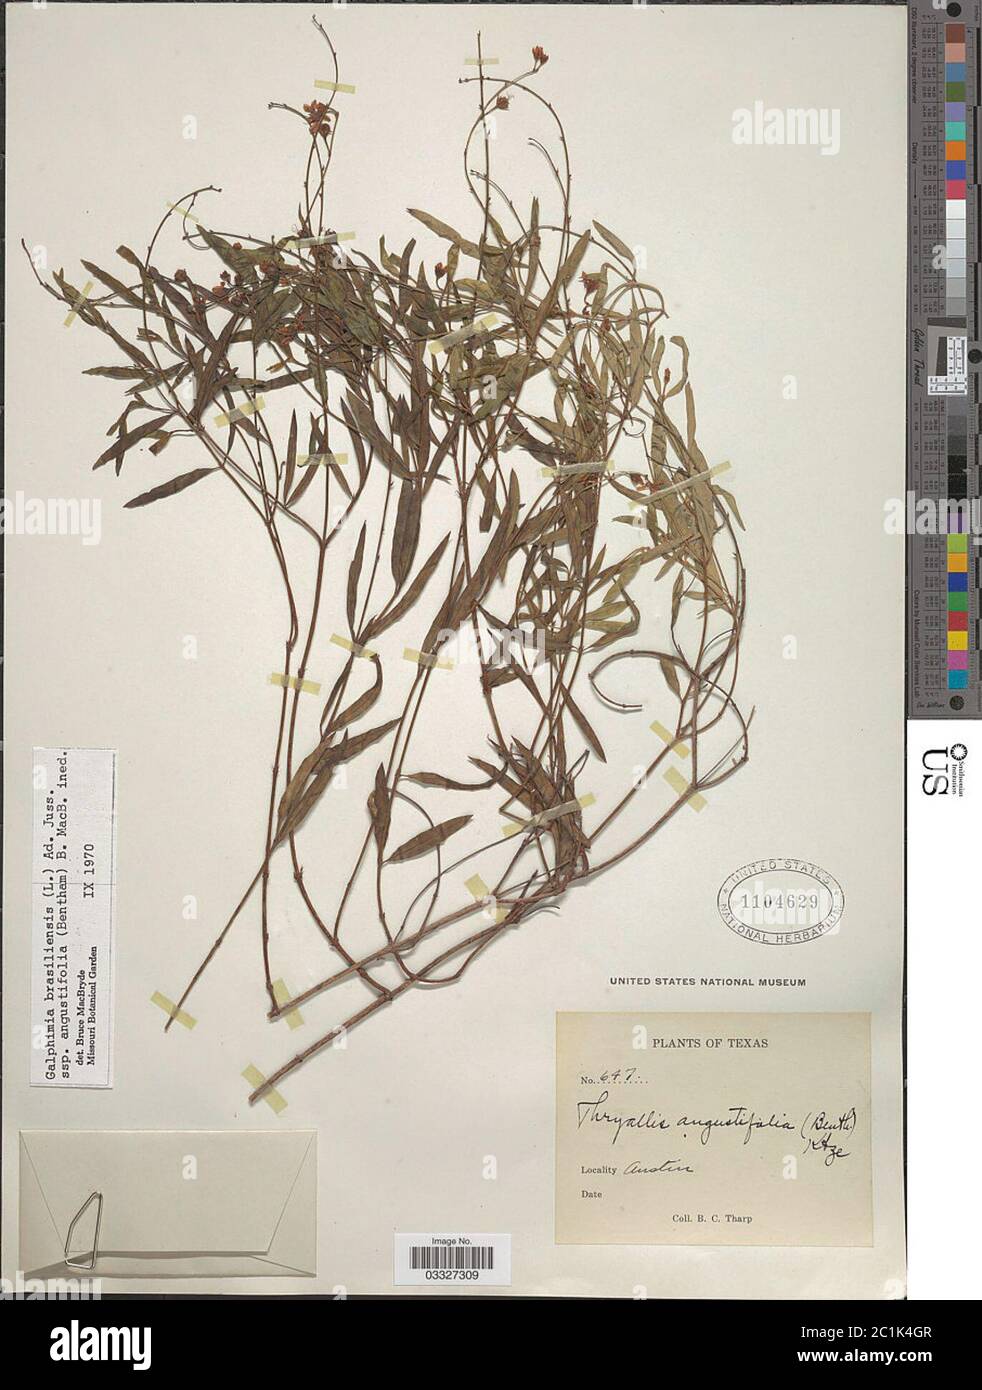 Galphimia angustifolia Benth Galphimia angustifolia Benth. Stock Photo